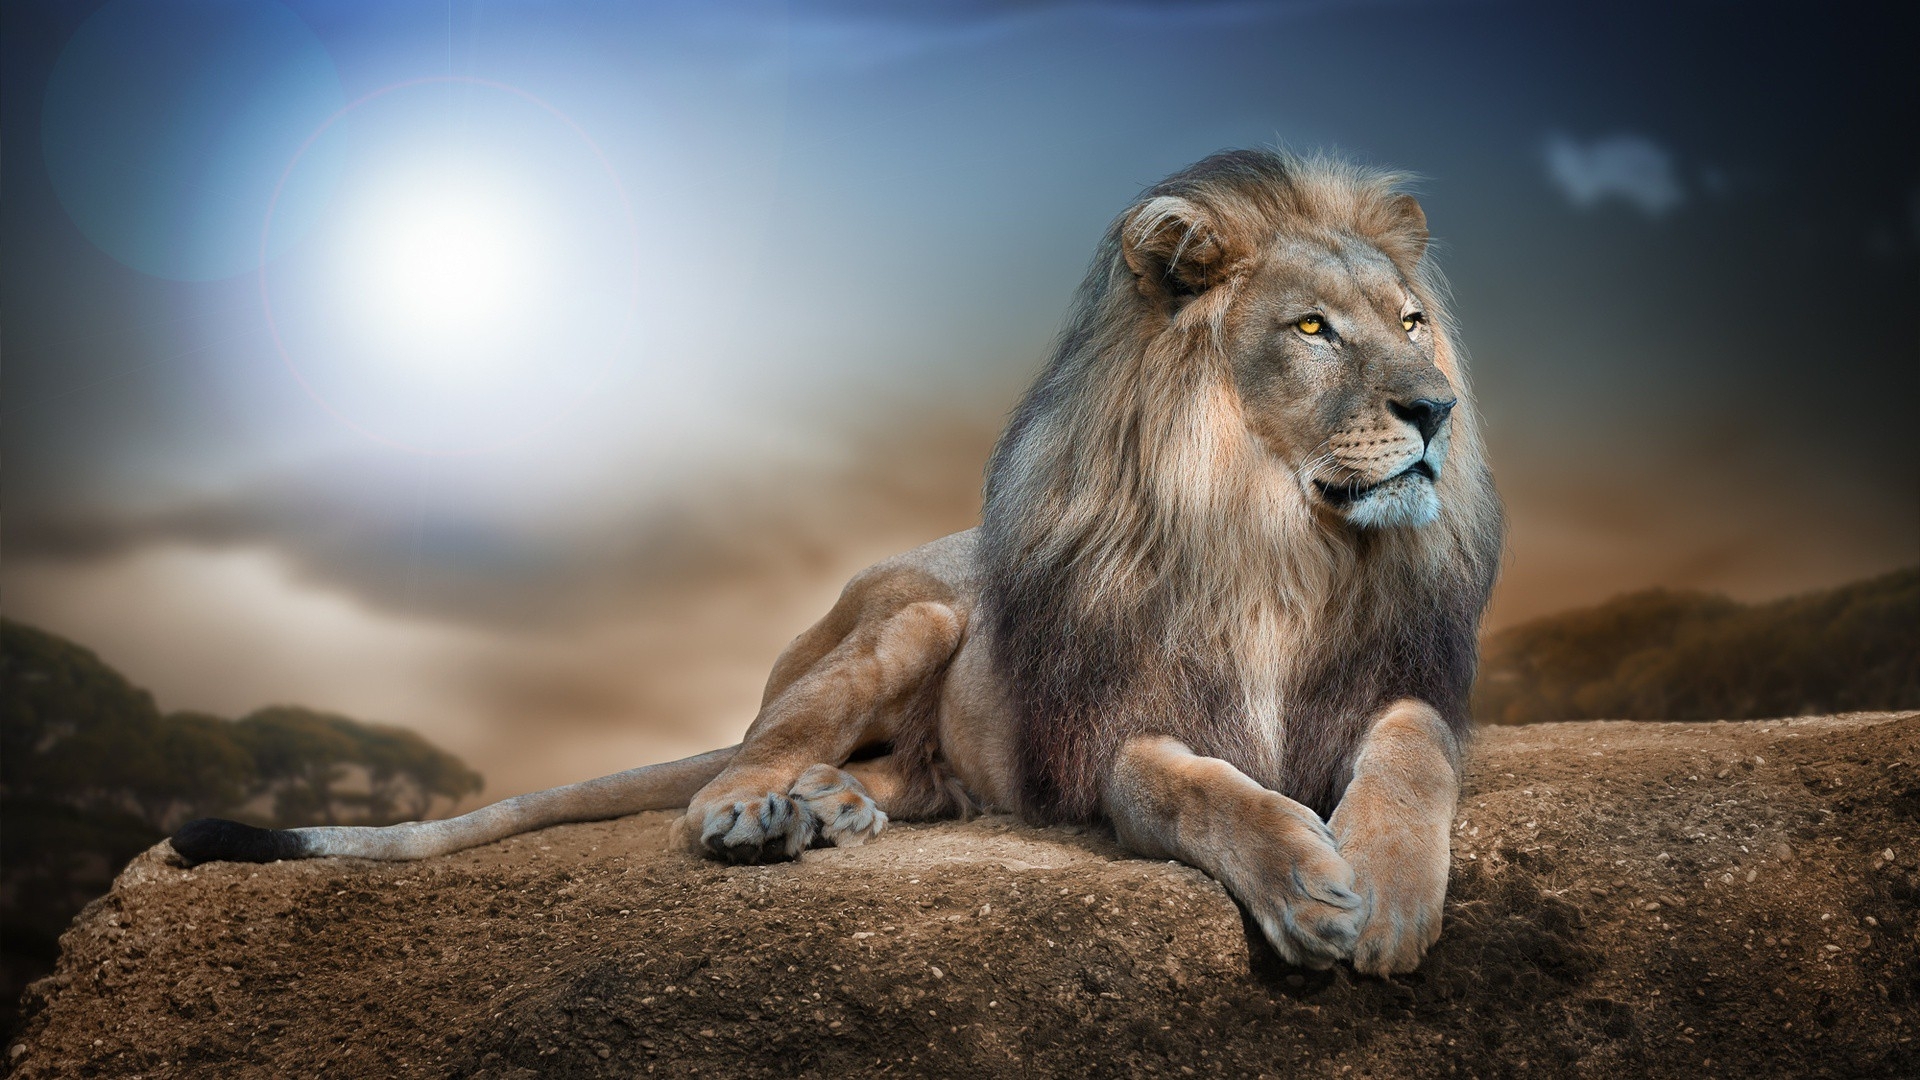 10 Best Wild Animal Wall Paper FULL HD 1080p For PC Desktop